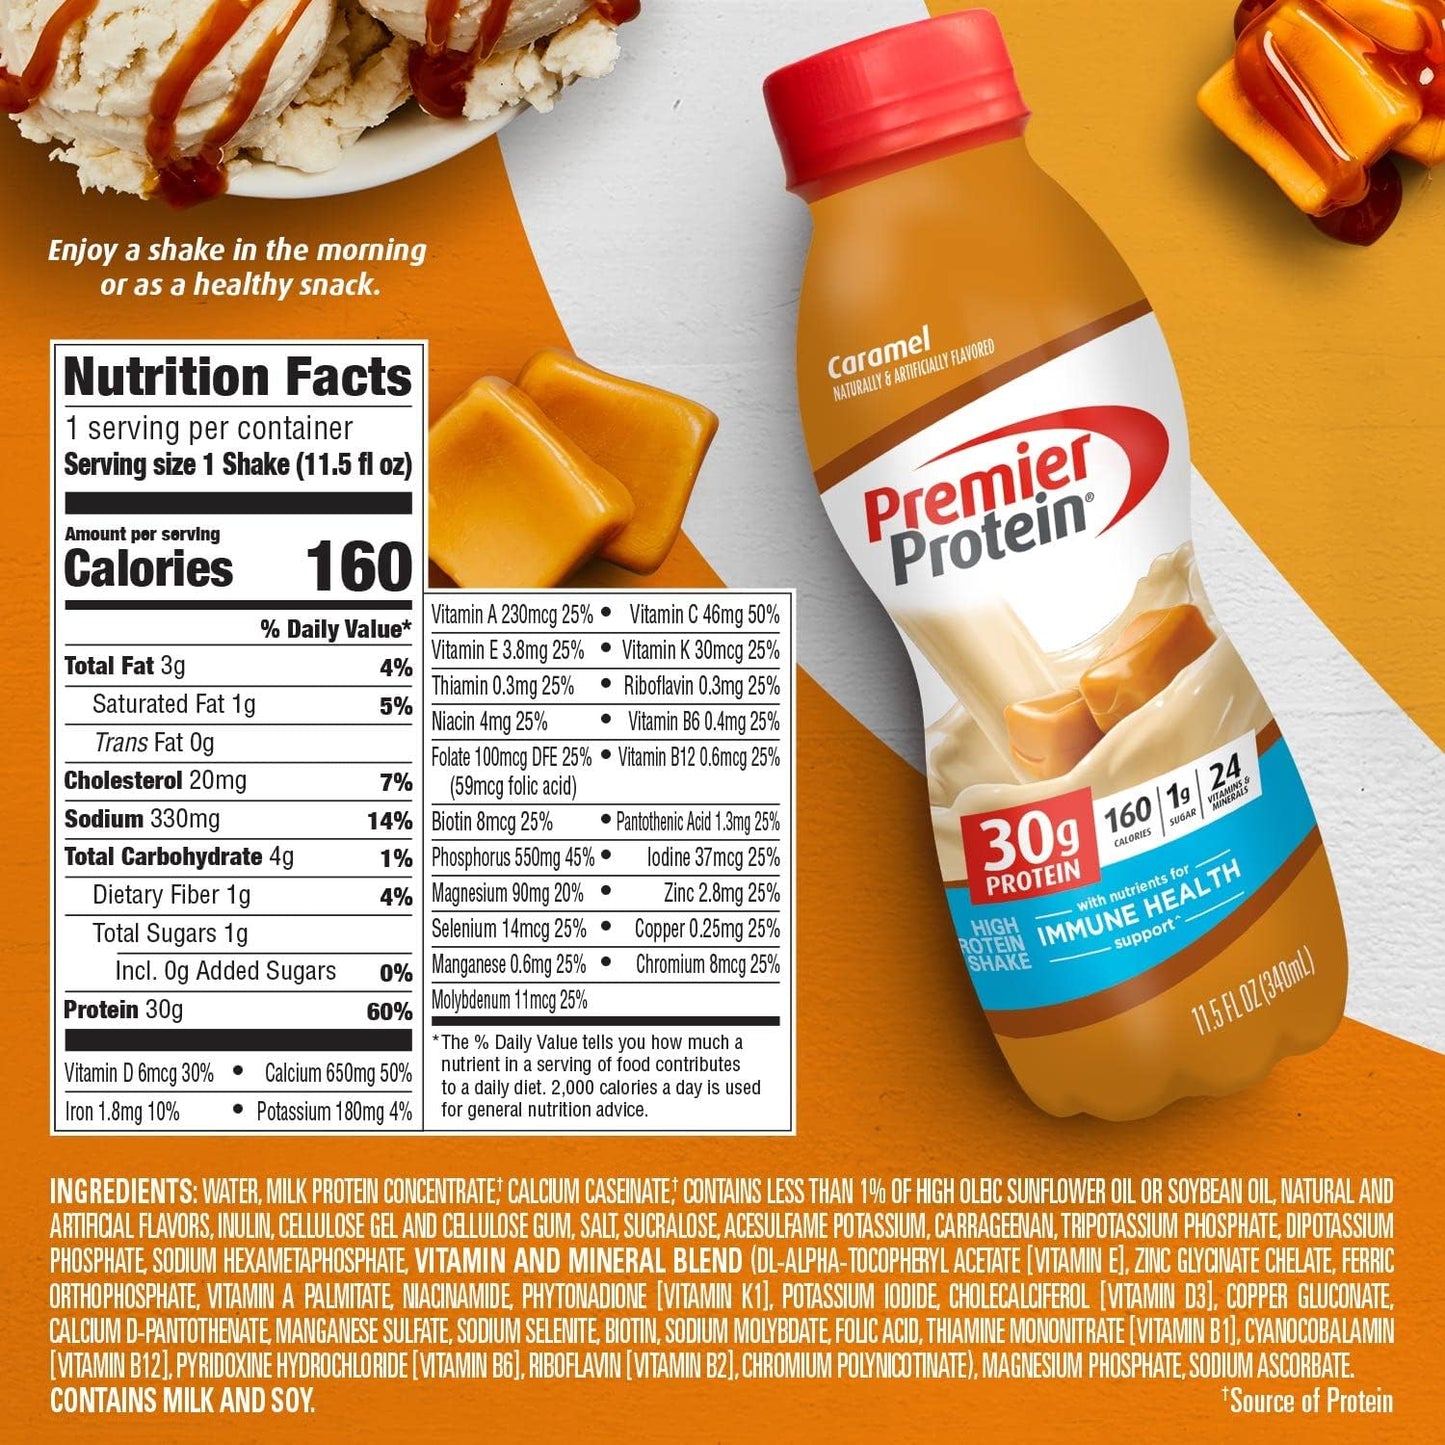 Premier Protein 30g Protein Shake, Caramel, 11.5 fl oz Shake, (12 count)